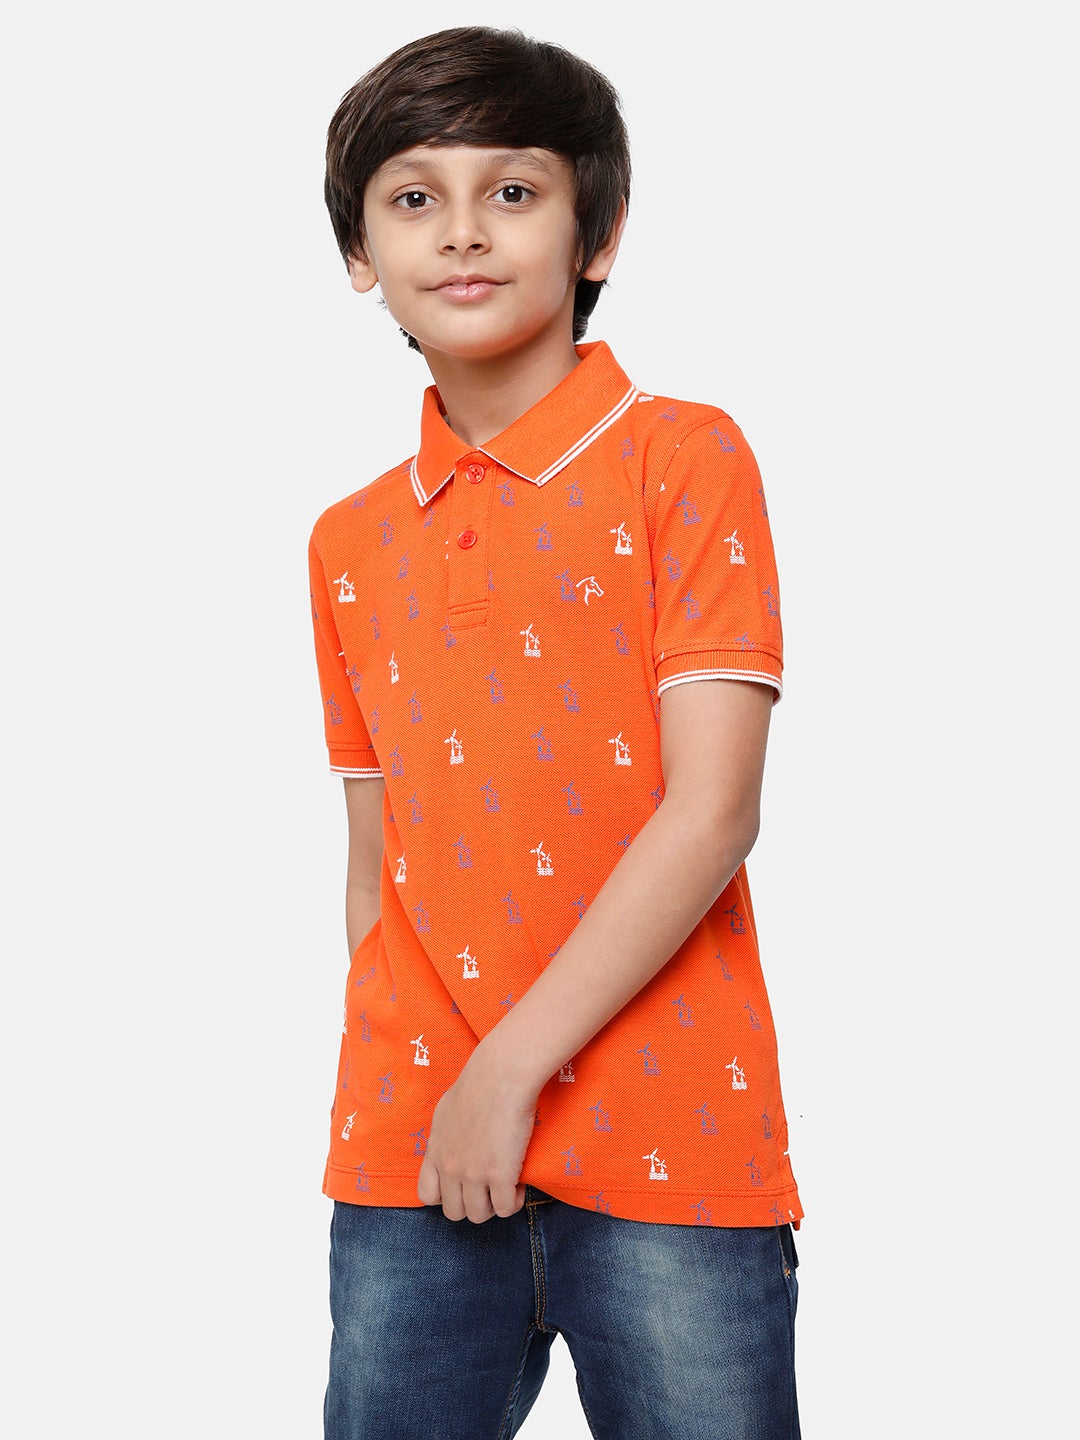 CP Boys Orange Printed Slim Fit Polo Neck T-Shirt T-shirt Classic Polo 